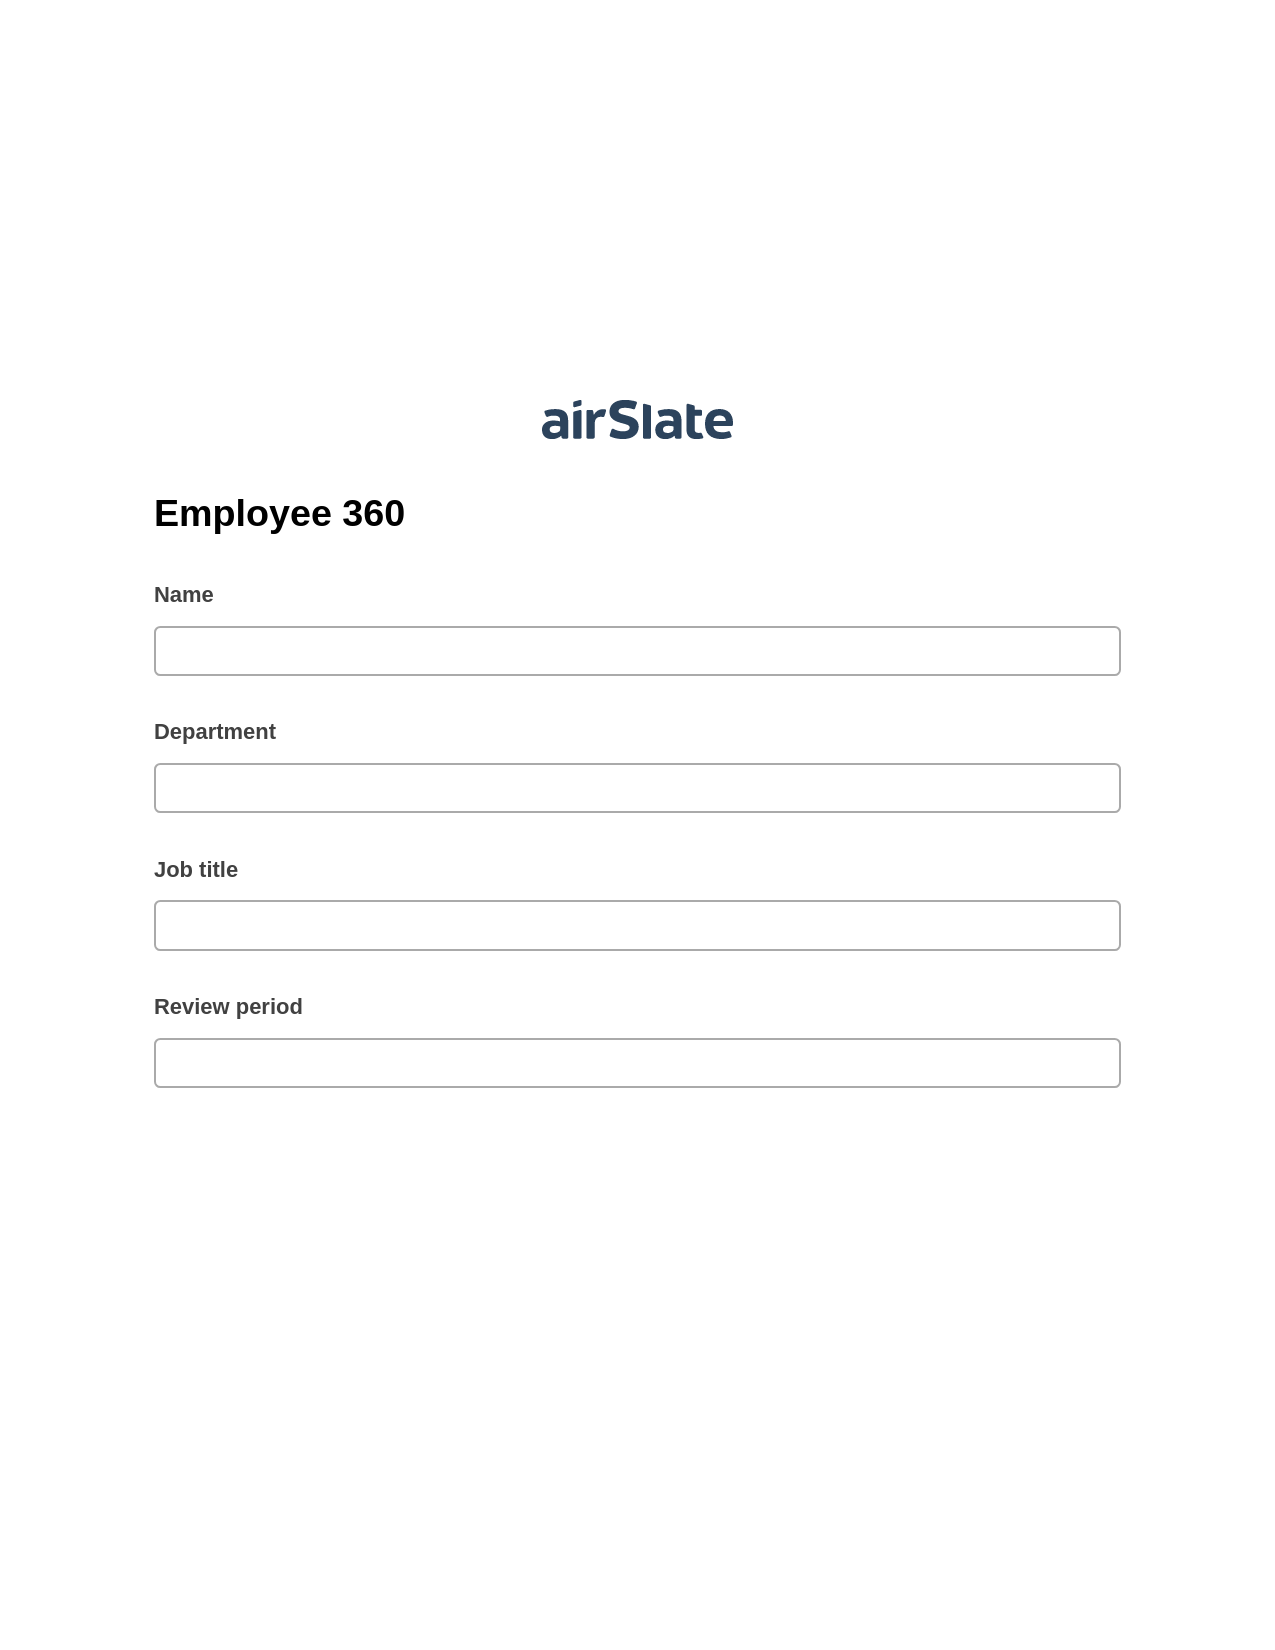 Multirole Employee 360 Pre-fill from CSV File Bot, Google Cloud Print Bot, Export to Smartsheet